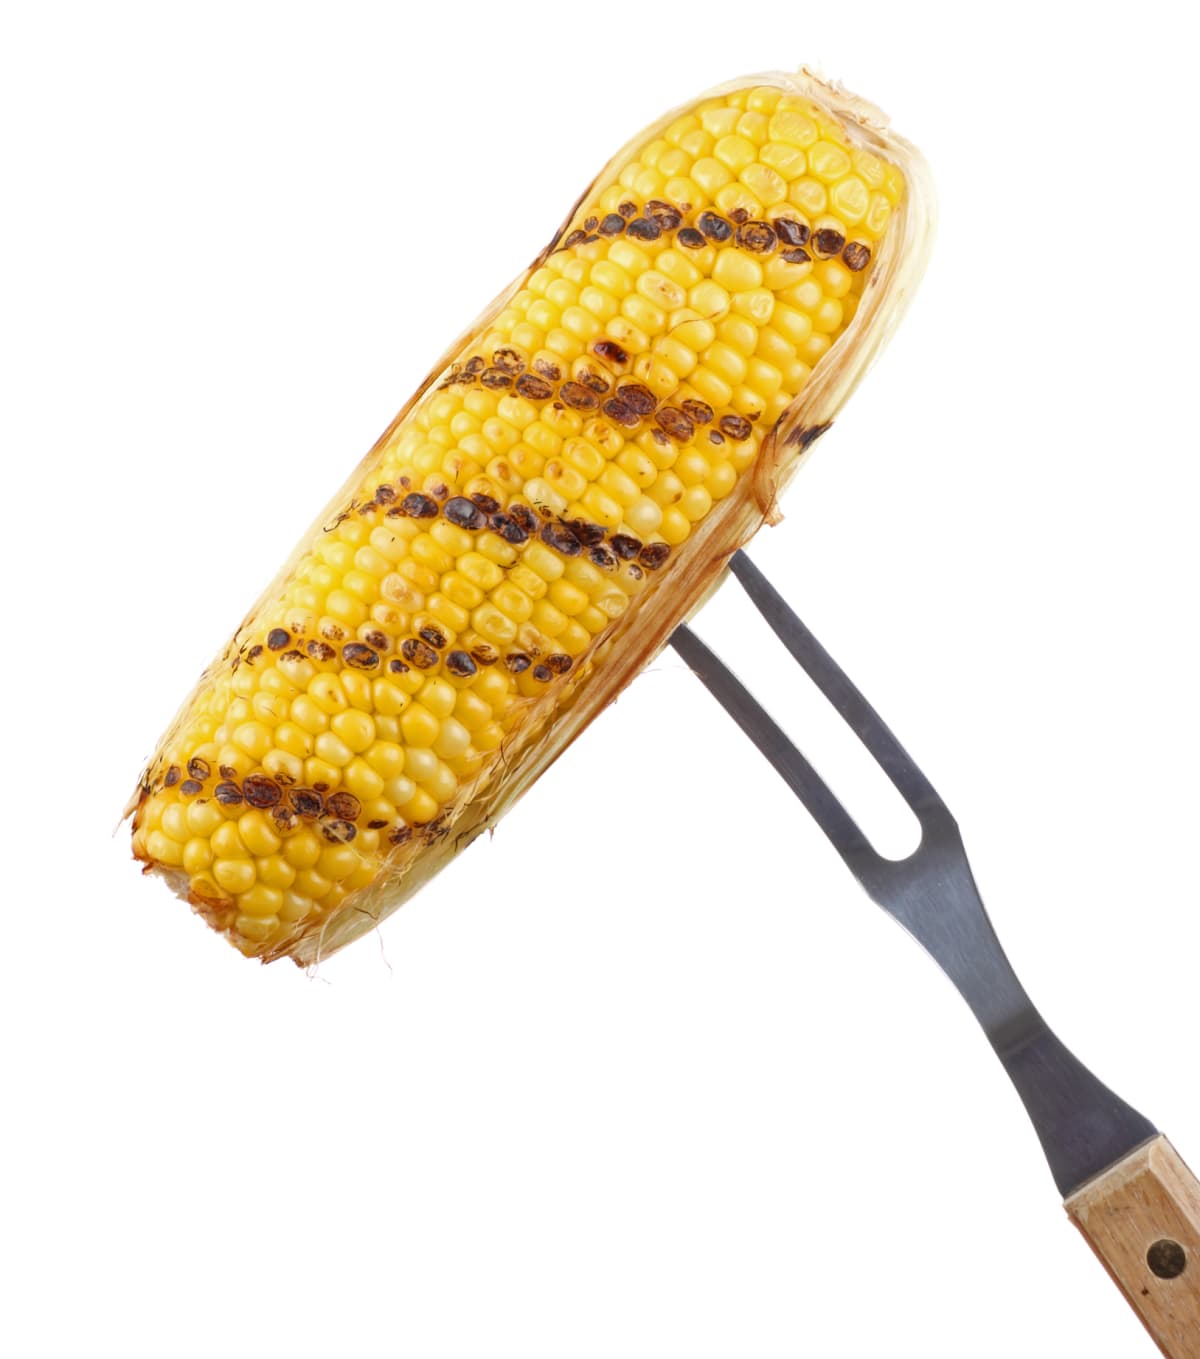 Roasted corn on grilling fork